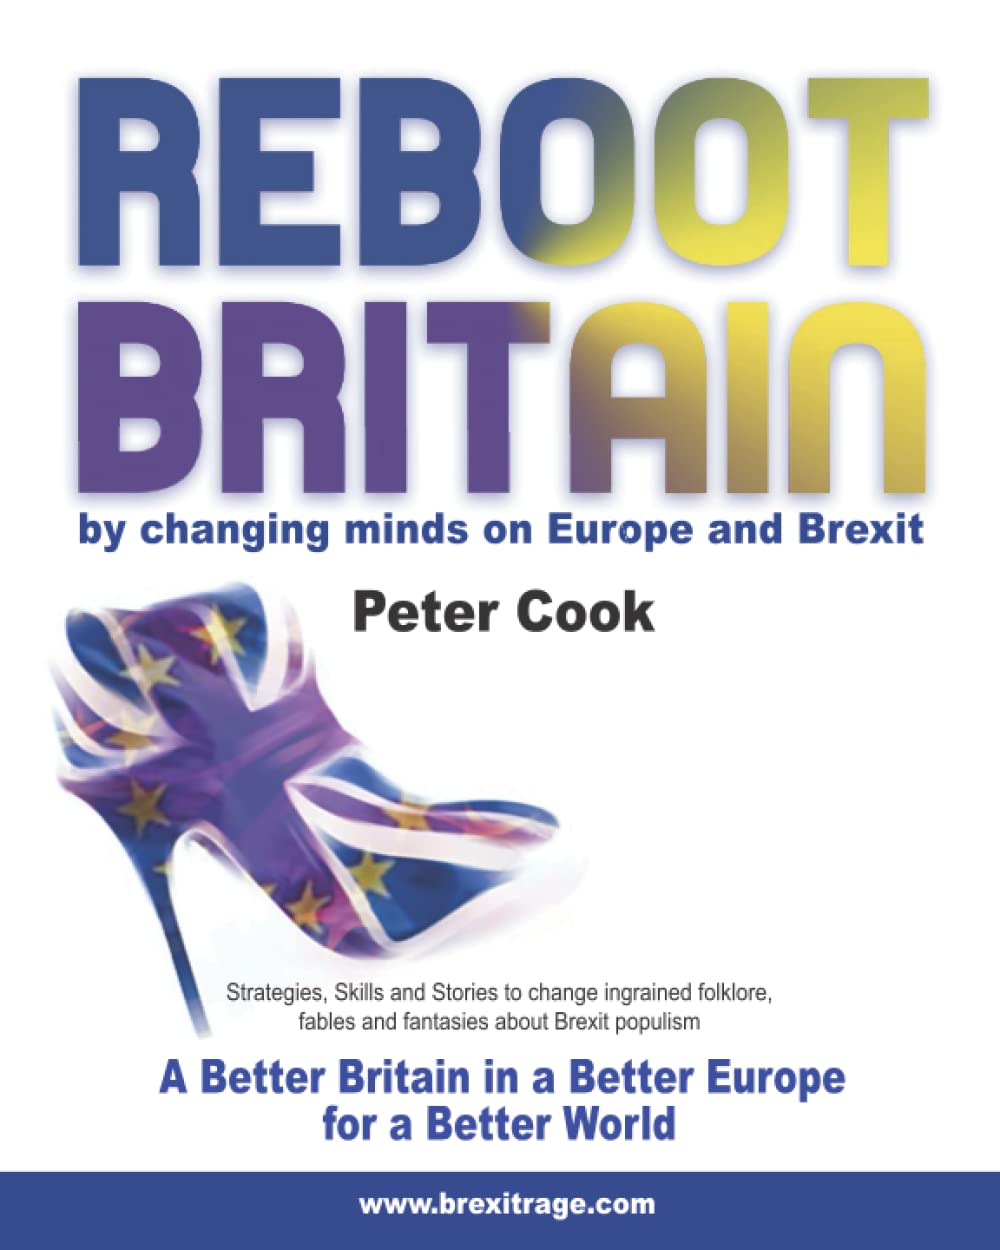 Re-boot Britain